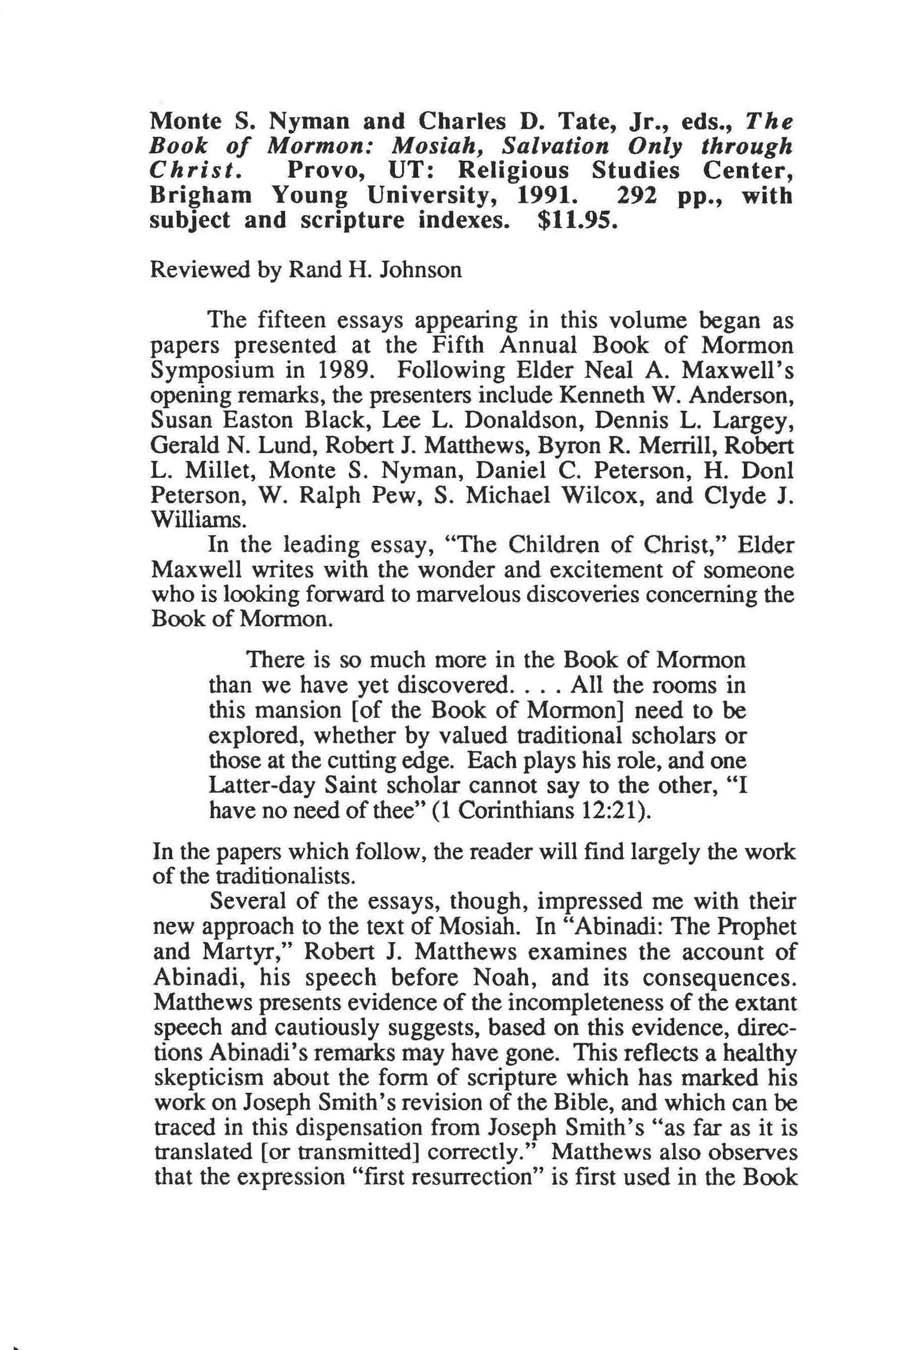 Monte S. Nyman and Charles D. Tate, Jr., eds., The Book oj Mormon: Mosiah, Saltlation Only through Christ. Provo, UT: Religious Studies Center, Bri$ham Young University, 1991. 292 pp.